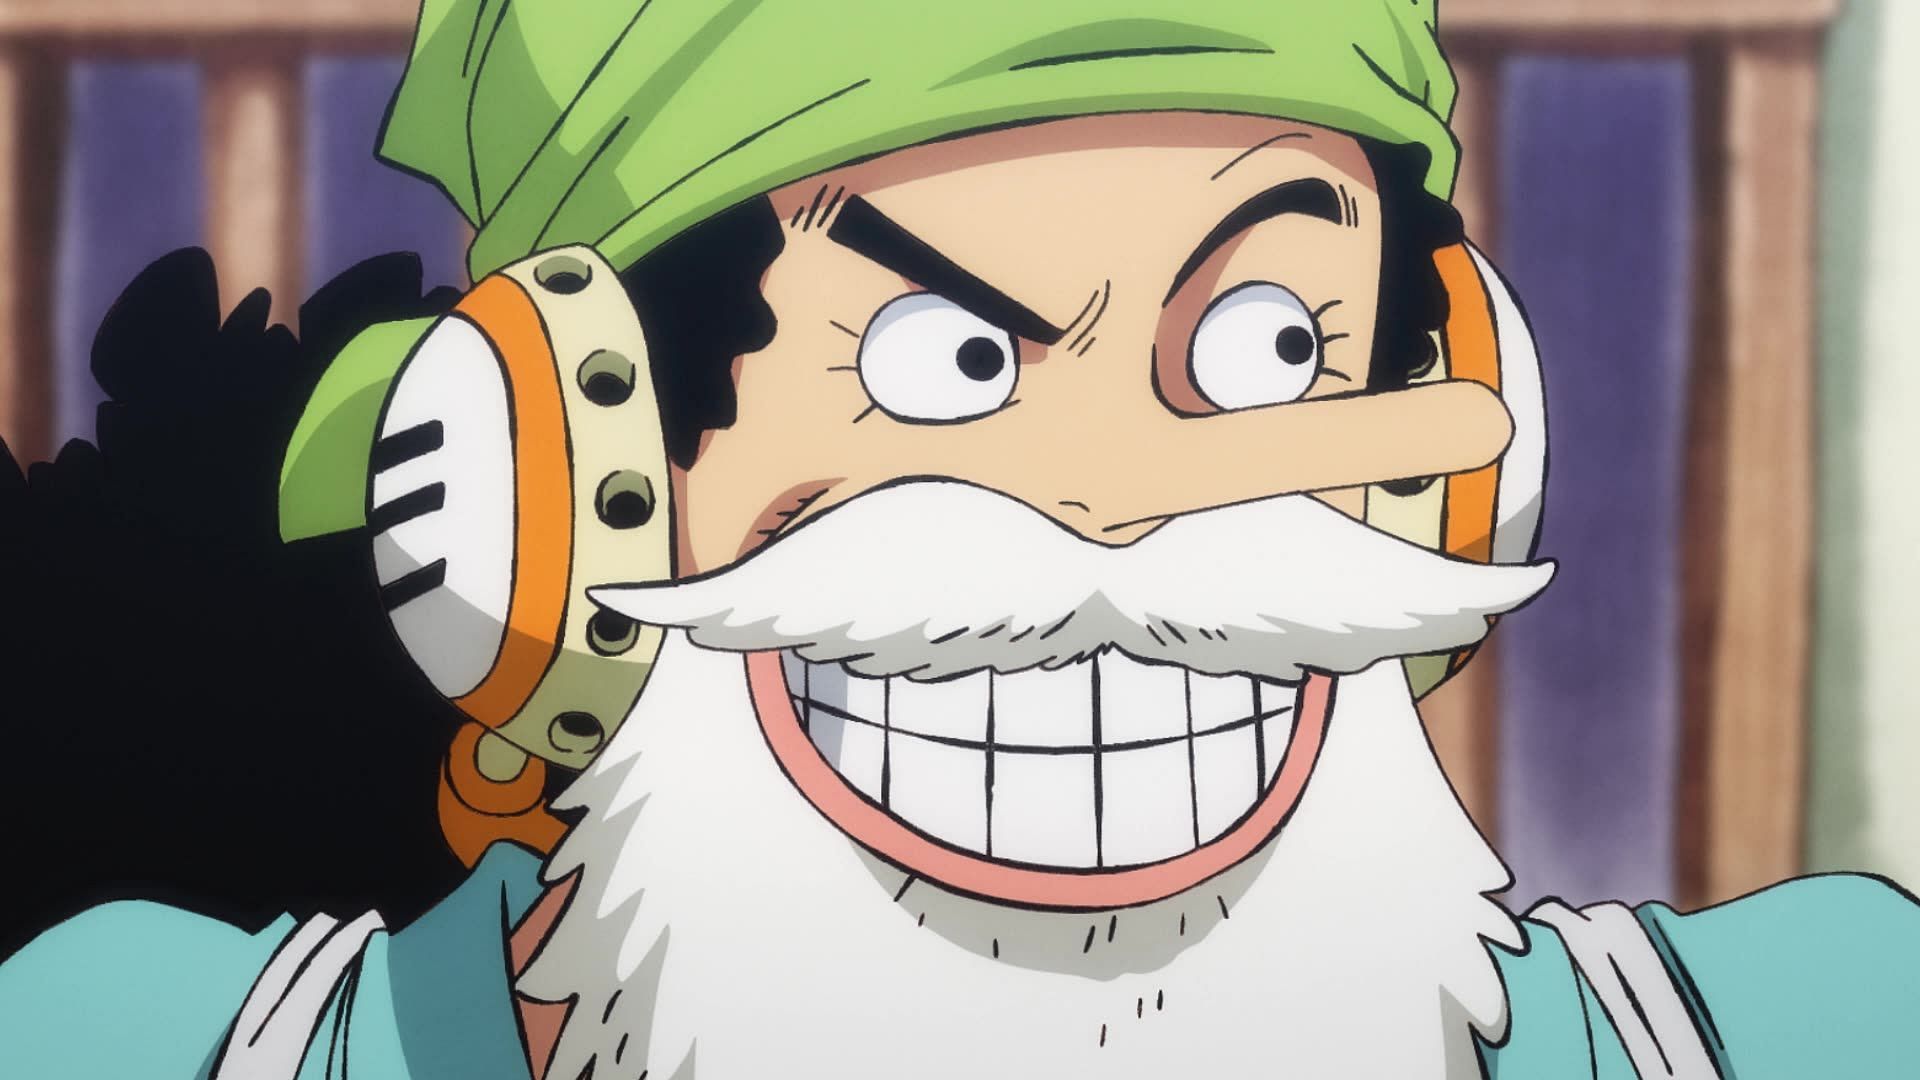 Usopp as seen in One Piece (Image via Toei Animation)